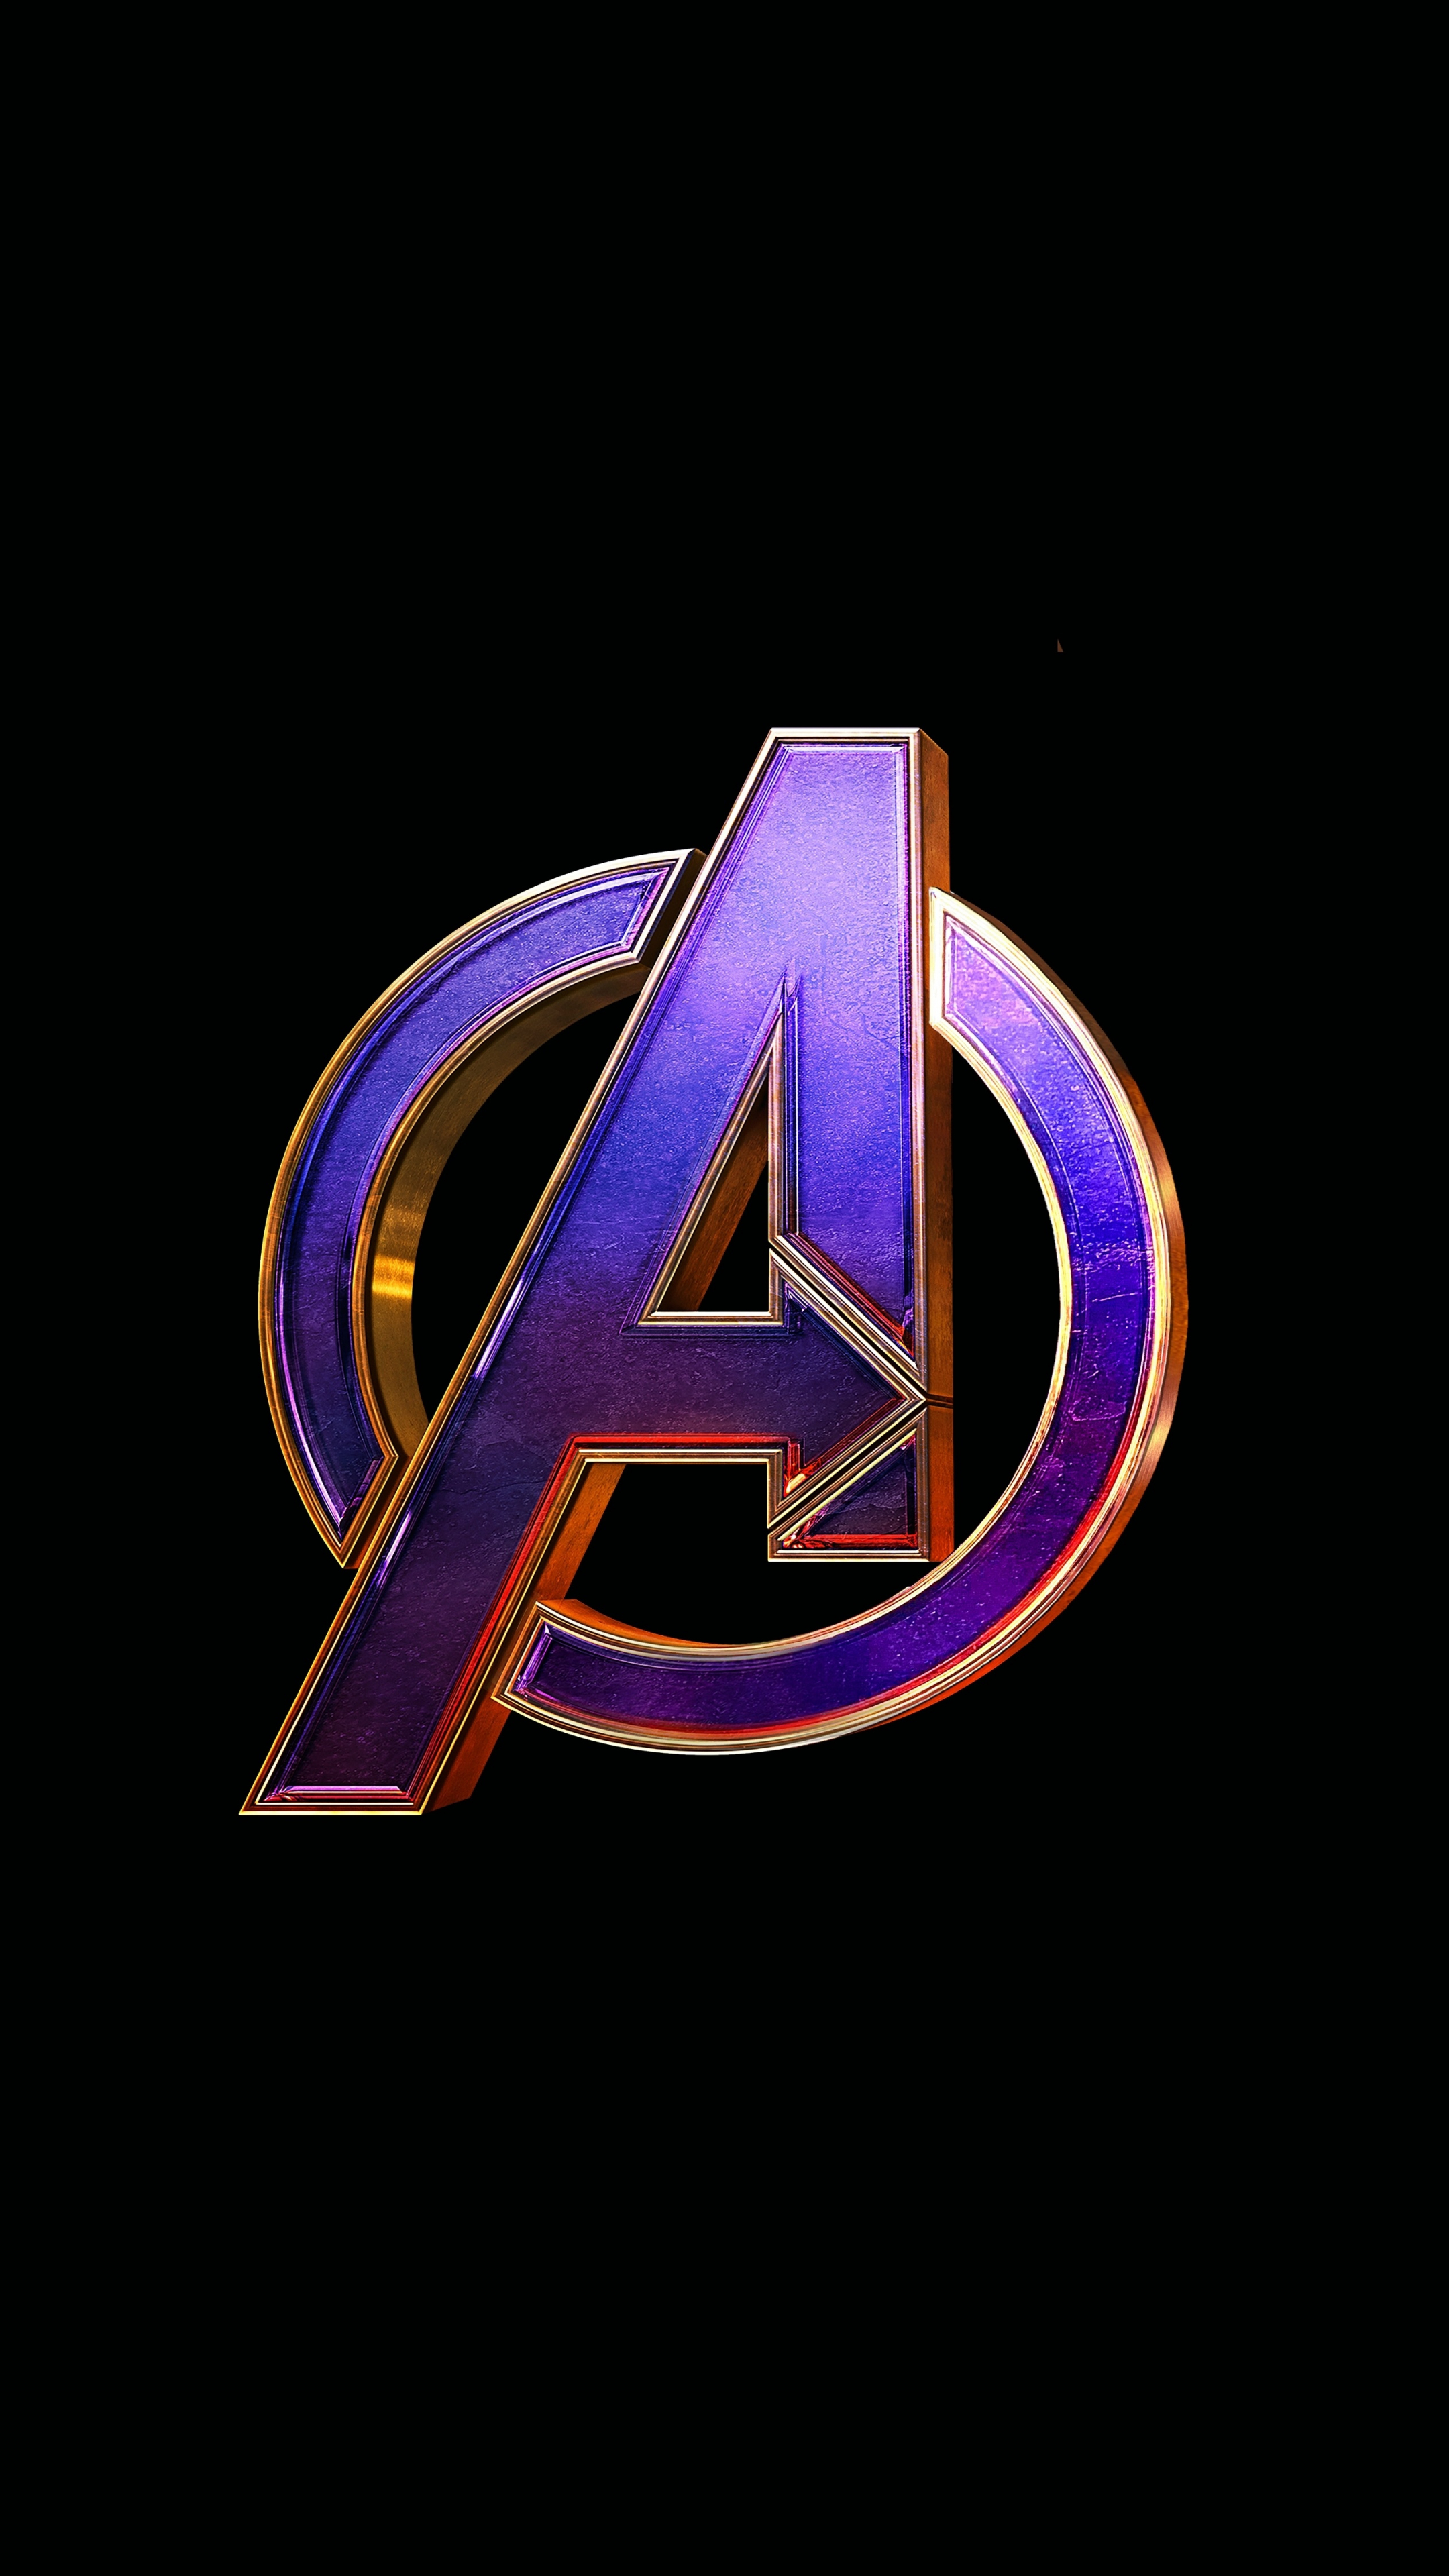 Download 2160x3840 Wallpaper Avengers Endgame Movie Logo 4k Sony Xperia Z5 Premium Dual 2160x3840 Hd Image Background 787